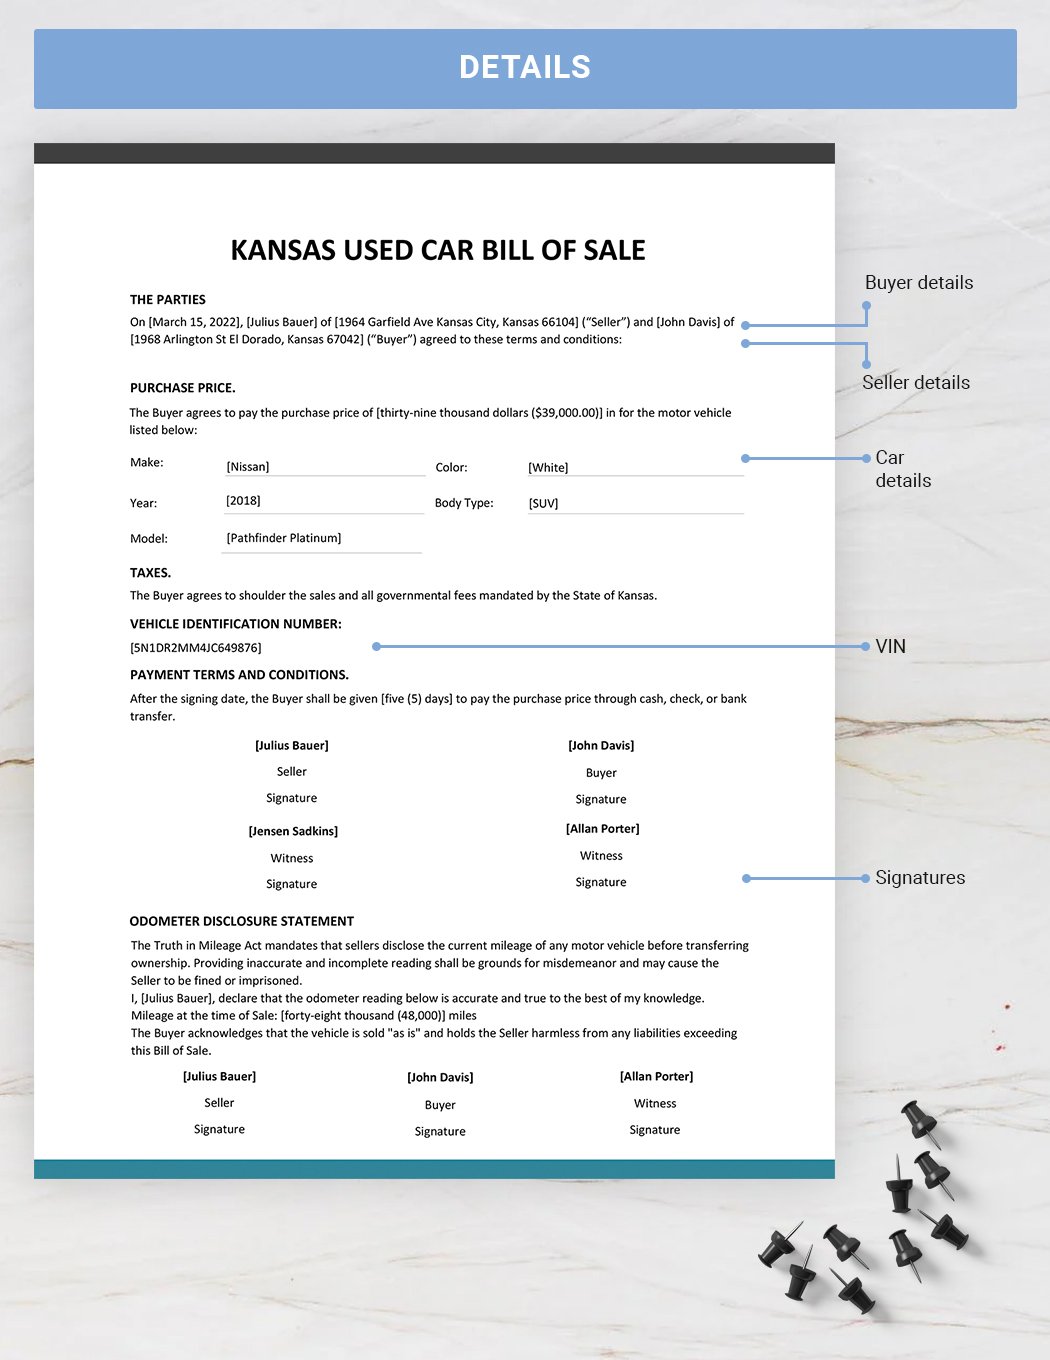 Kansas Used Car Bill of Sale Template